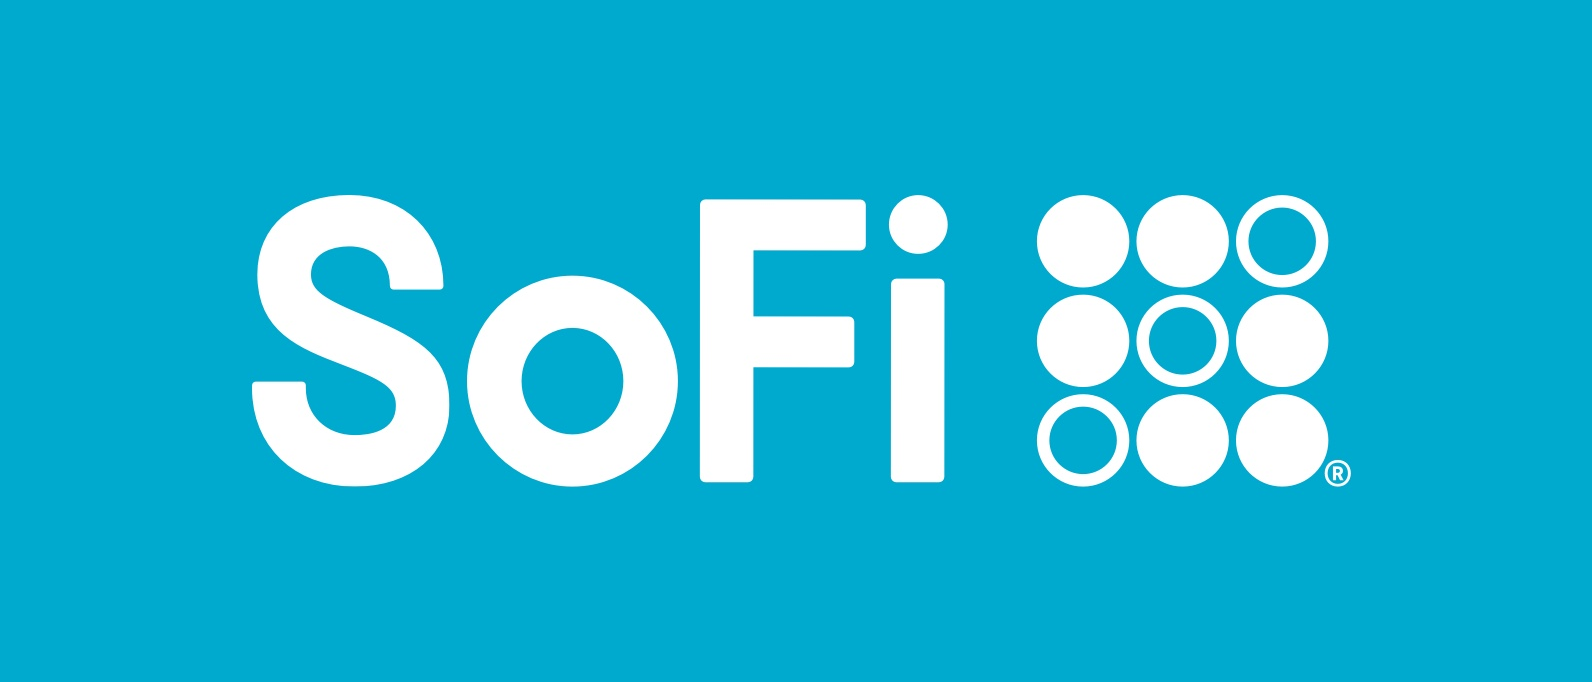 Sofi-Logo